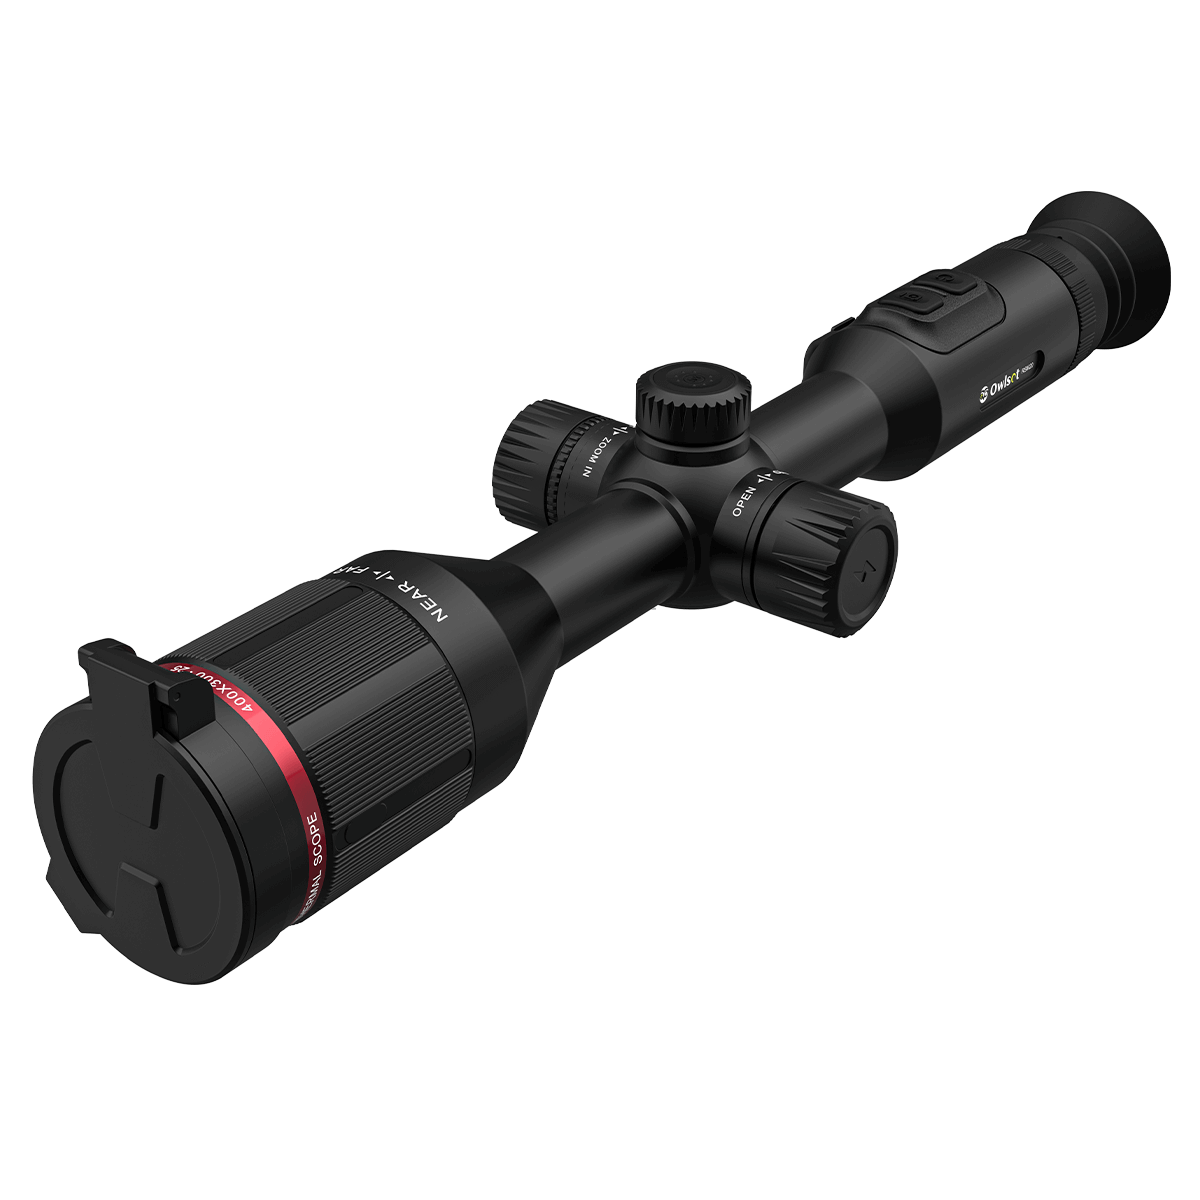 Owlset RSM20 1.6-6.4x25 Thermal Riflescope